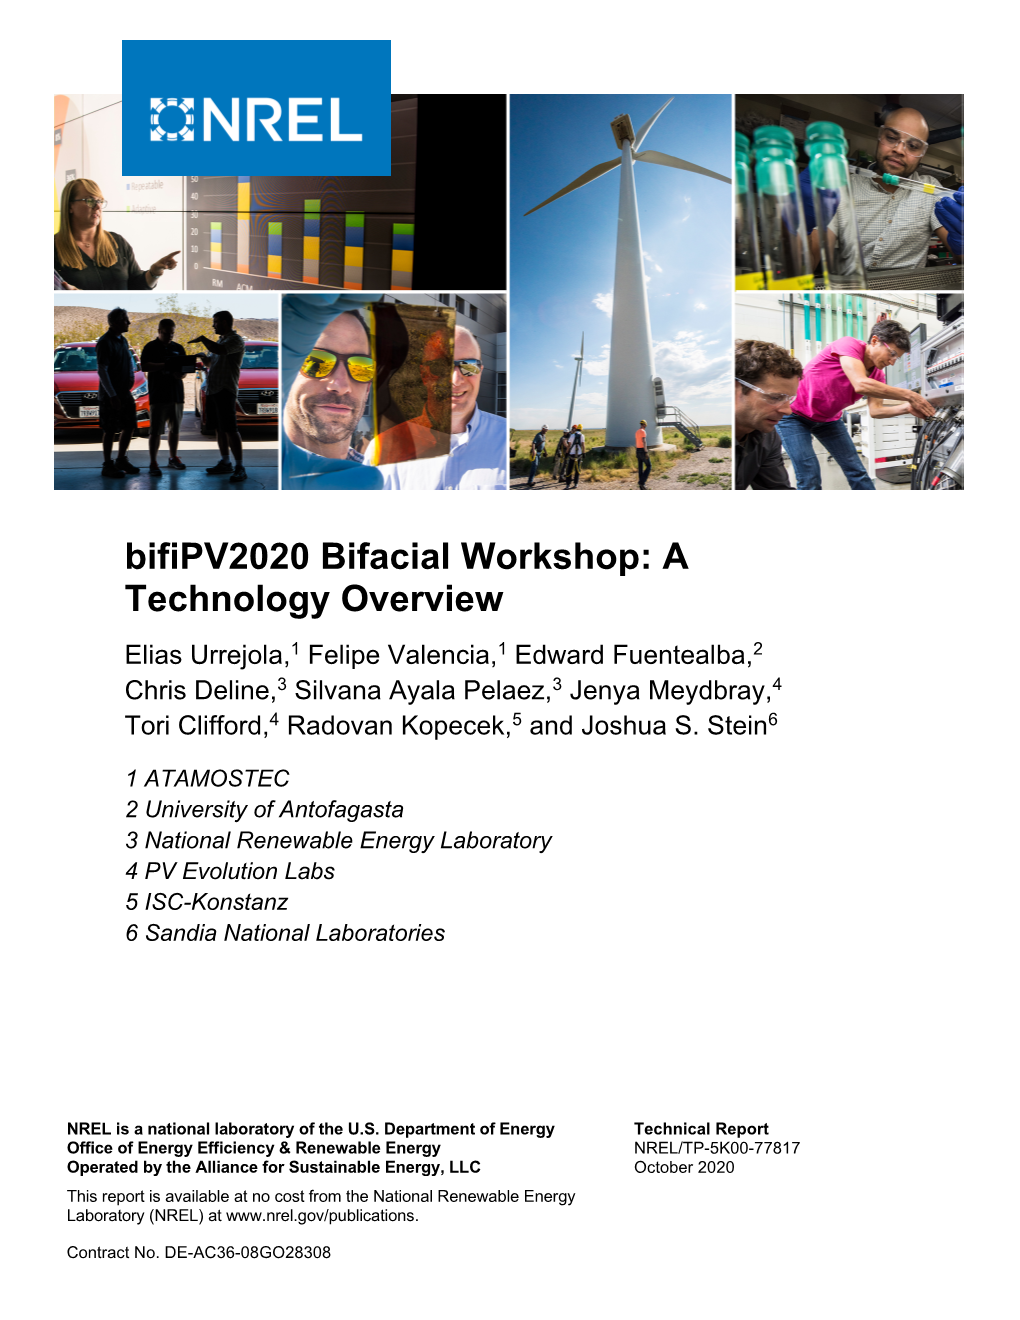 Bifipv2020 Bifacial Workshop